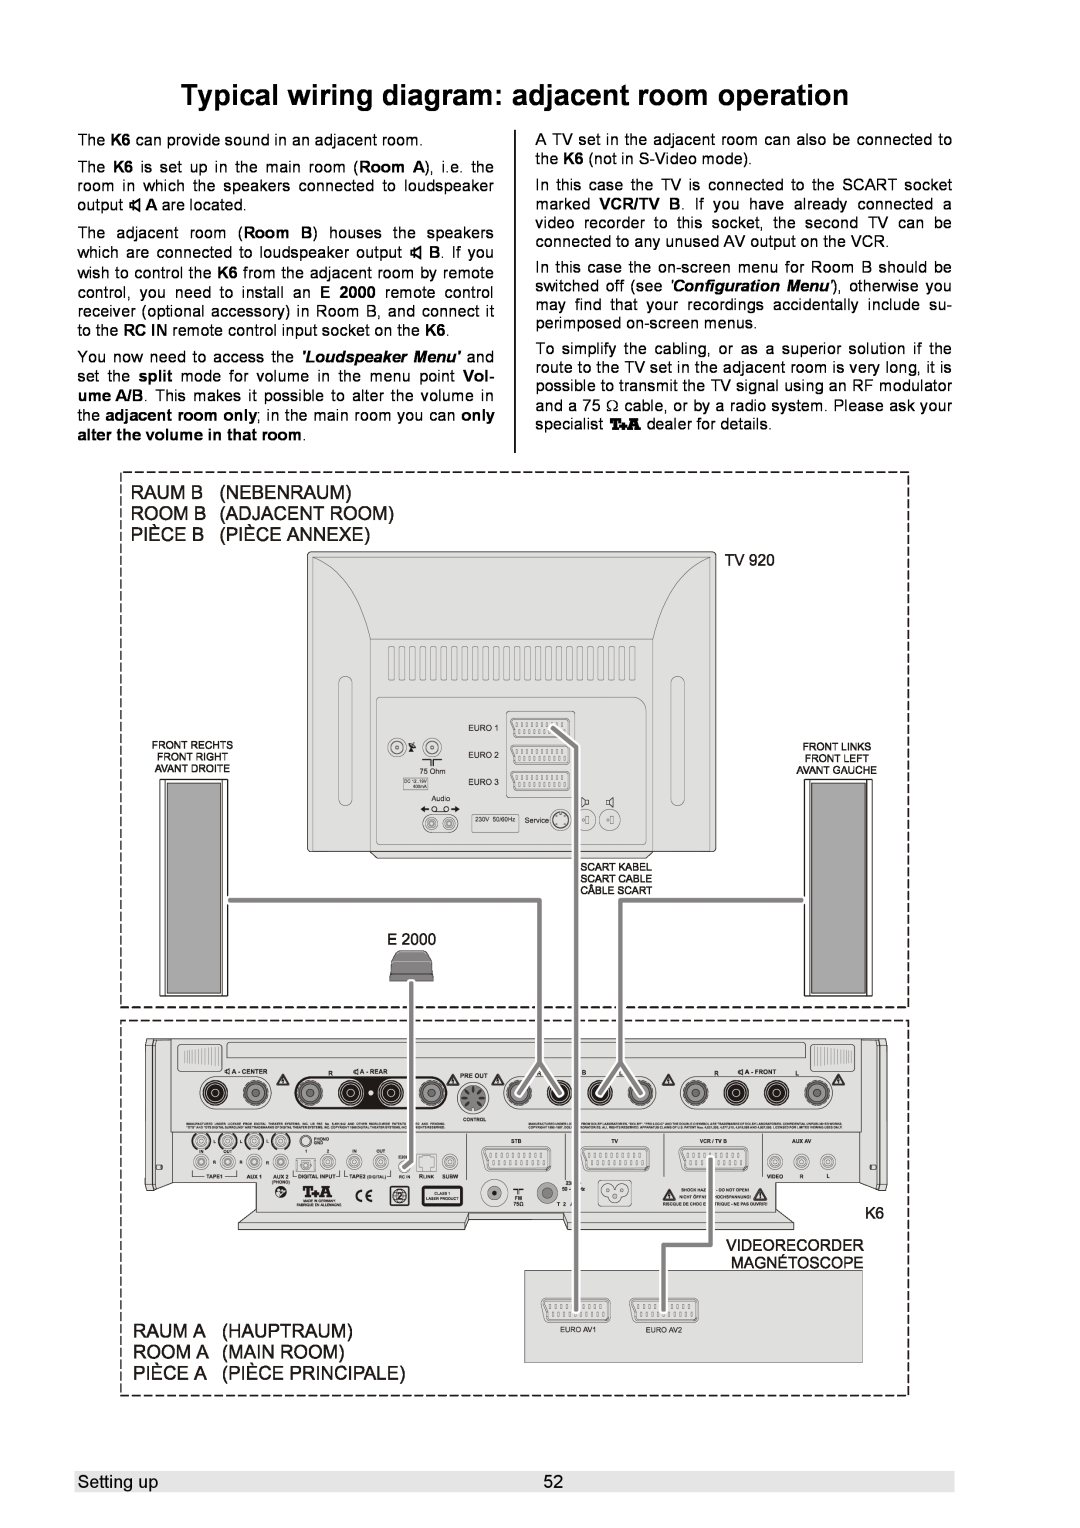 T+A Elektroakustik K 6 user manual Typical wiring diagram adjacent room operation, Settingup 